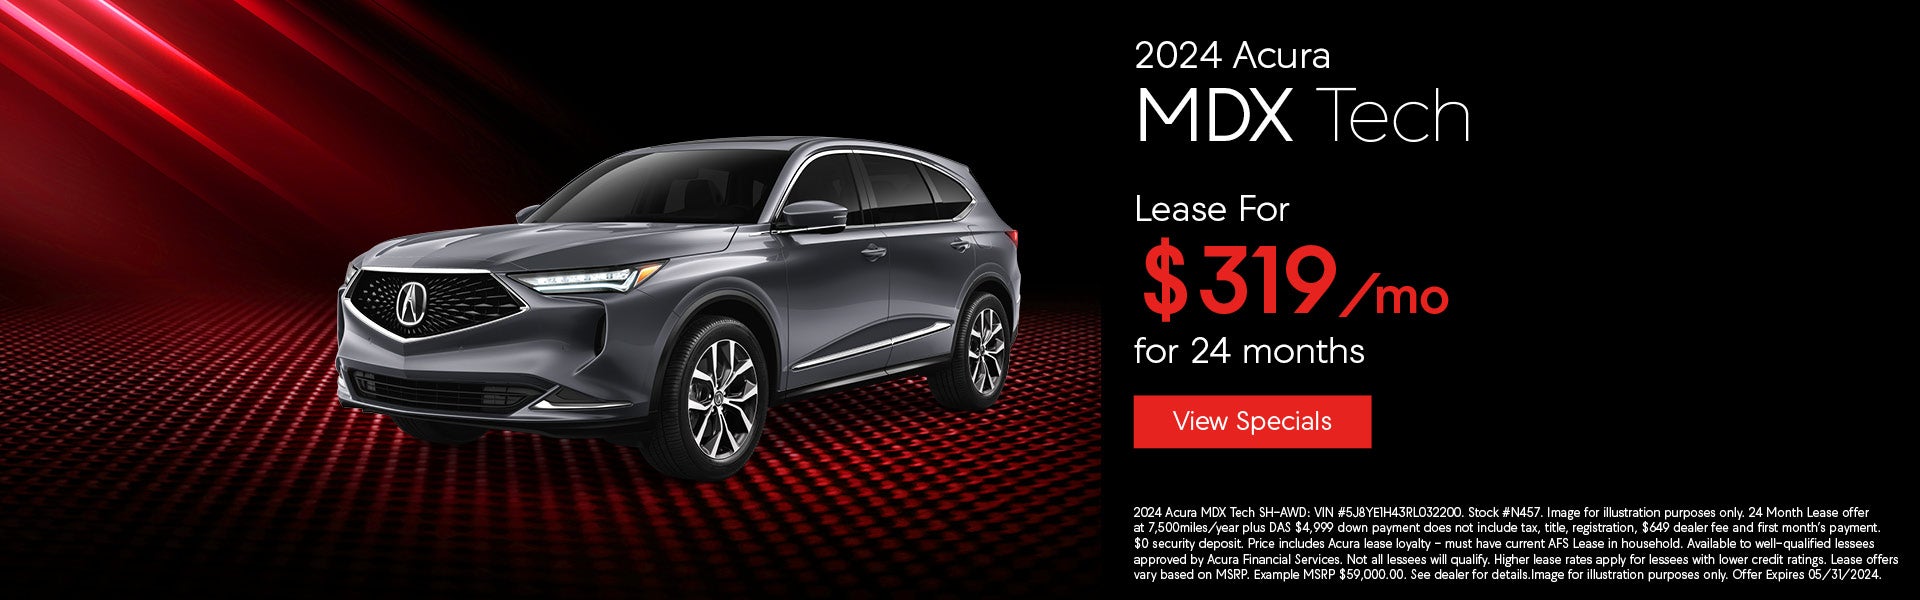 2024 Acura MDX Tech Offer